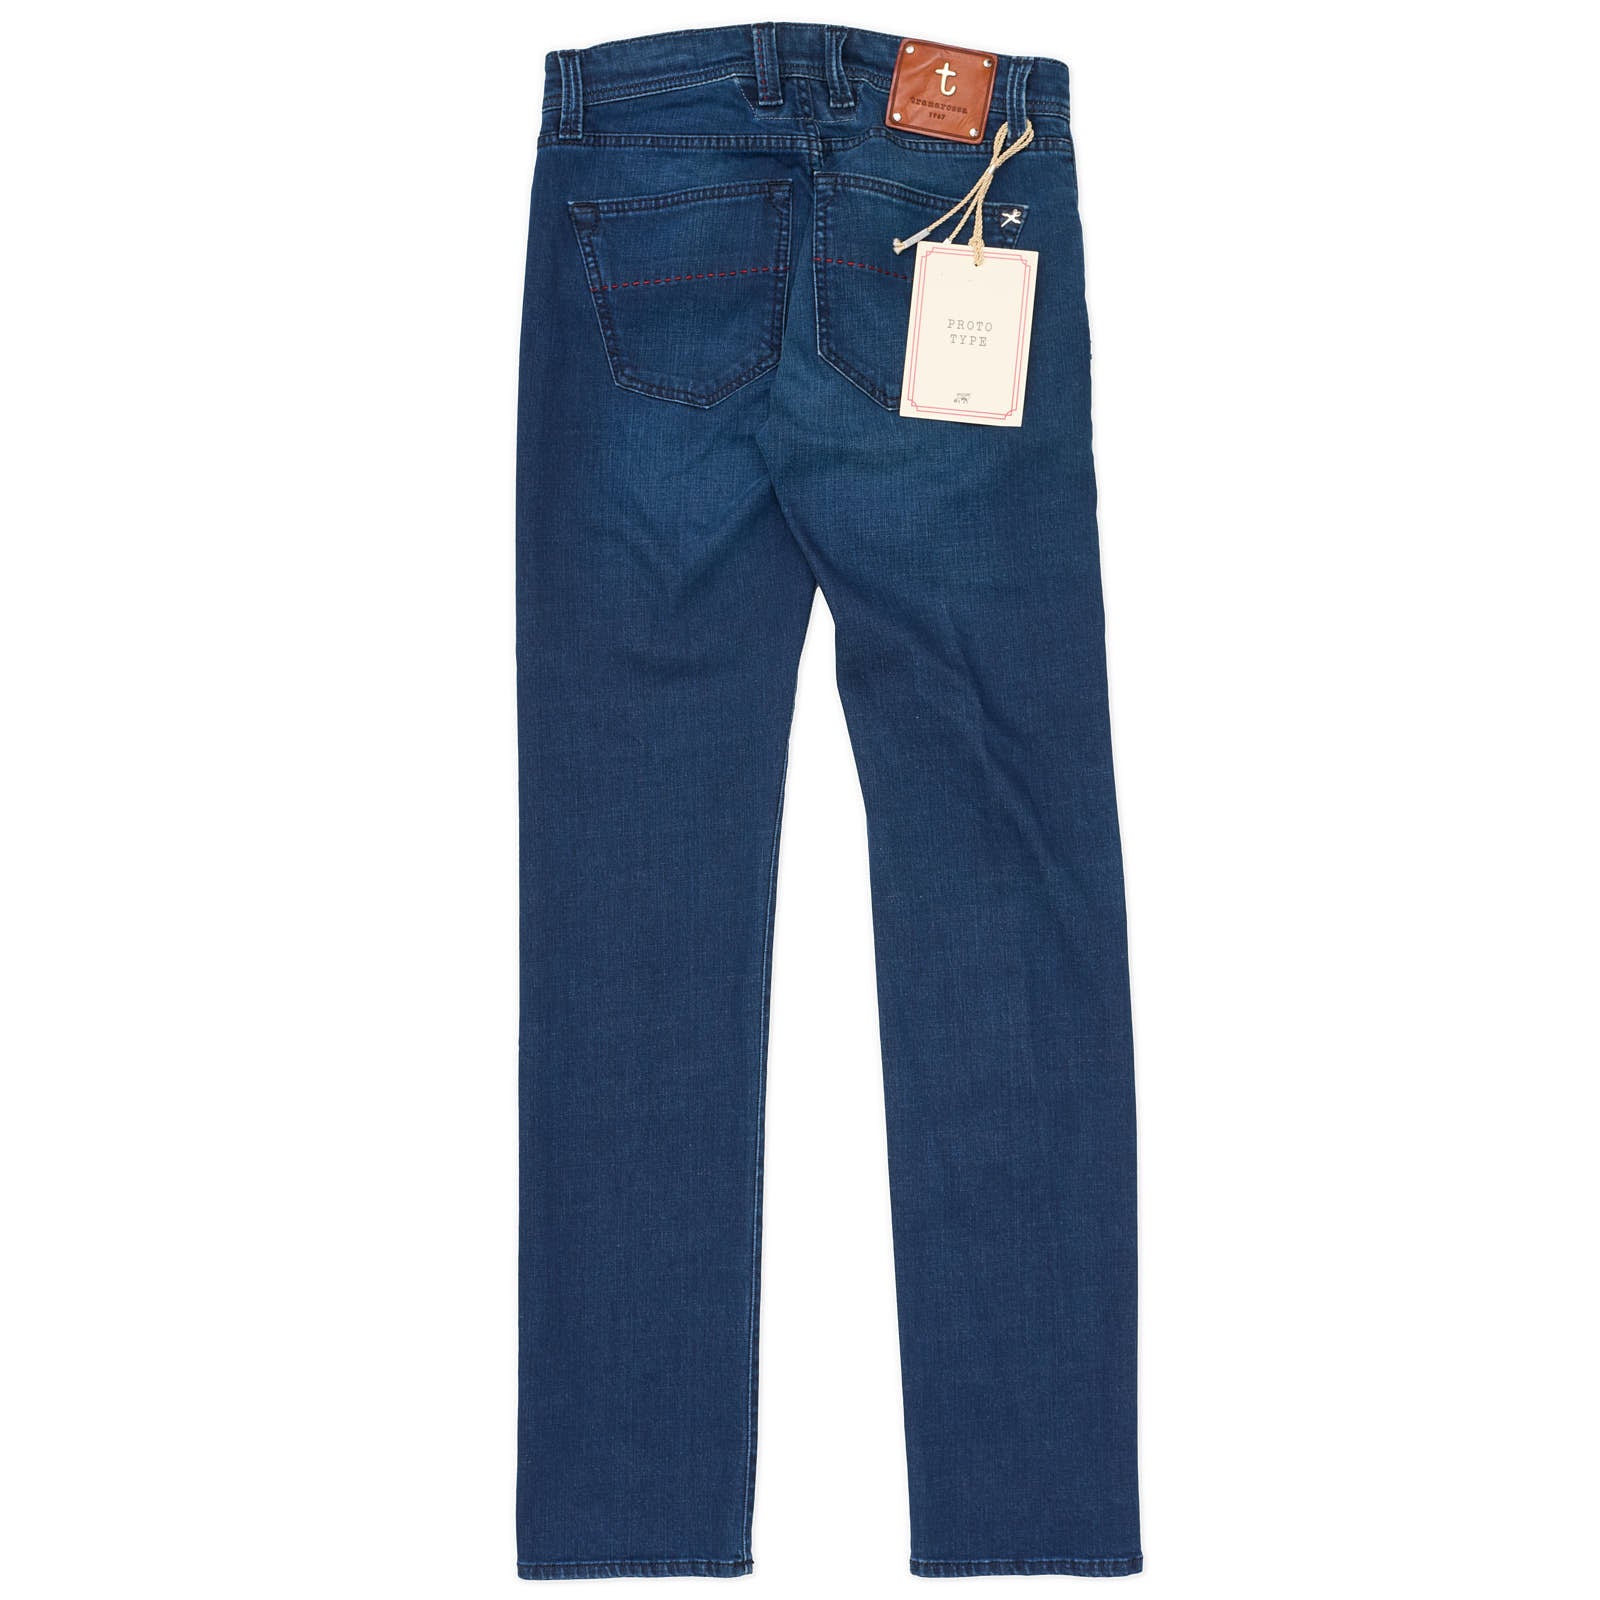 TRAMAROSSA Michelangelo Blue Cotton Stertch Slim Fit Jeans Pants NEW